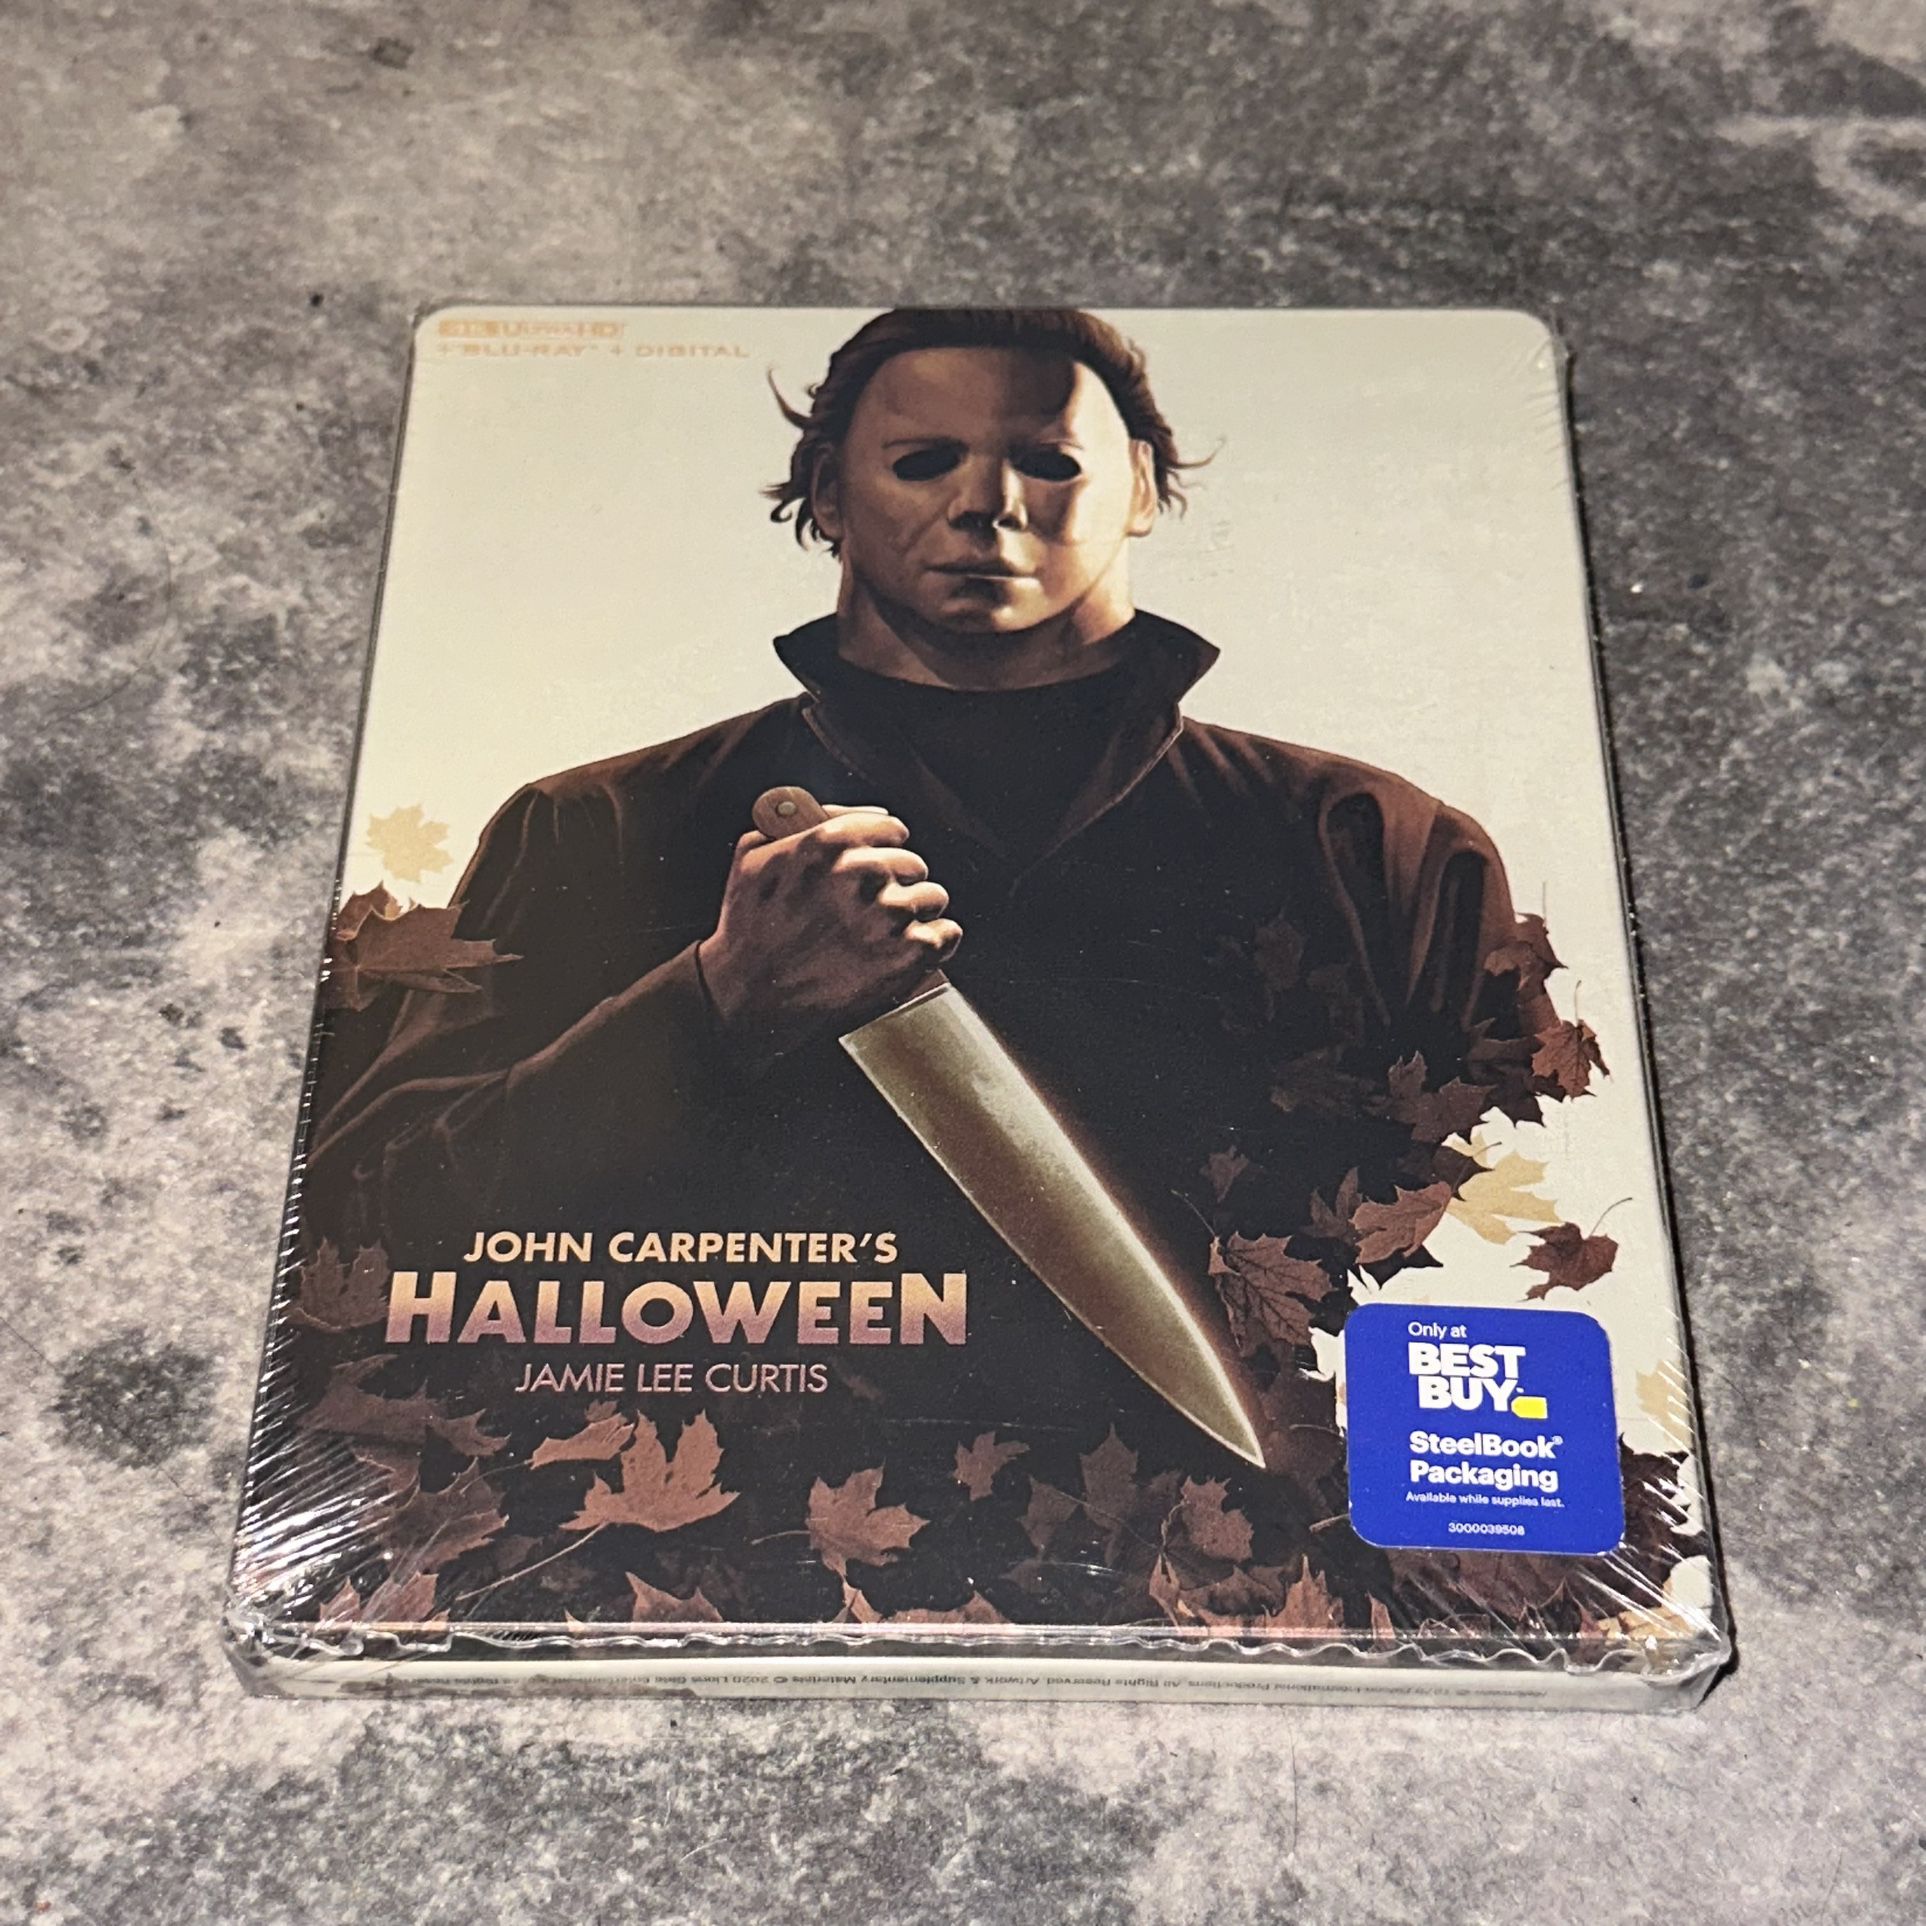 NEW Halloween 1978 Best Buy Limited Edition Steelbook 4K Ultra HD Bluray + Digital